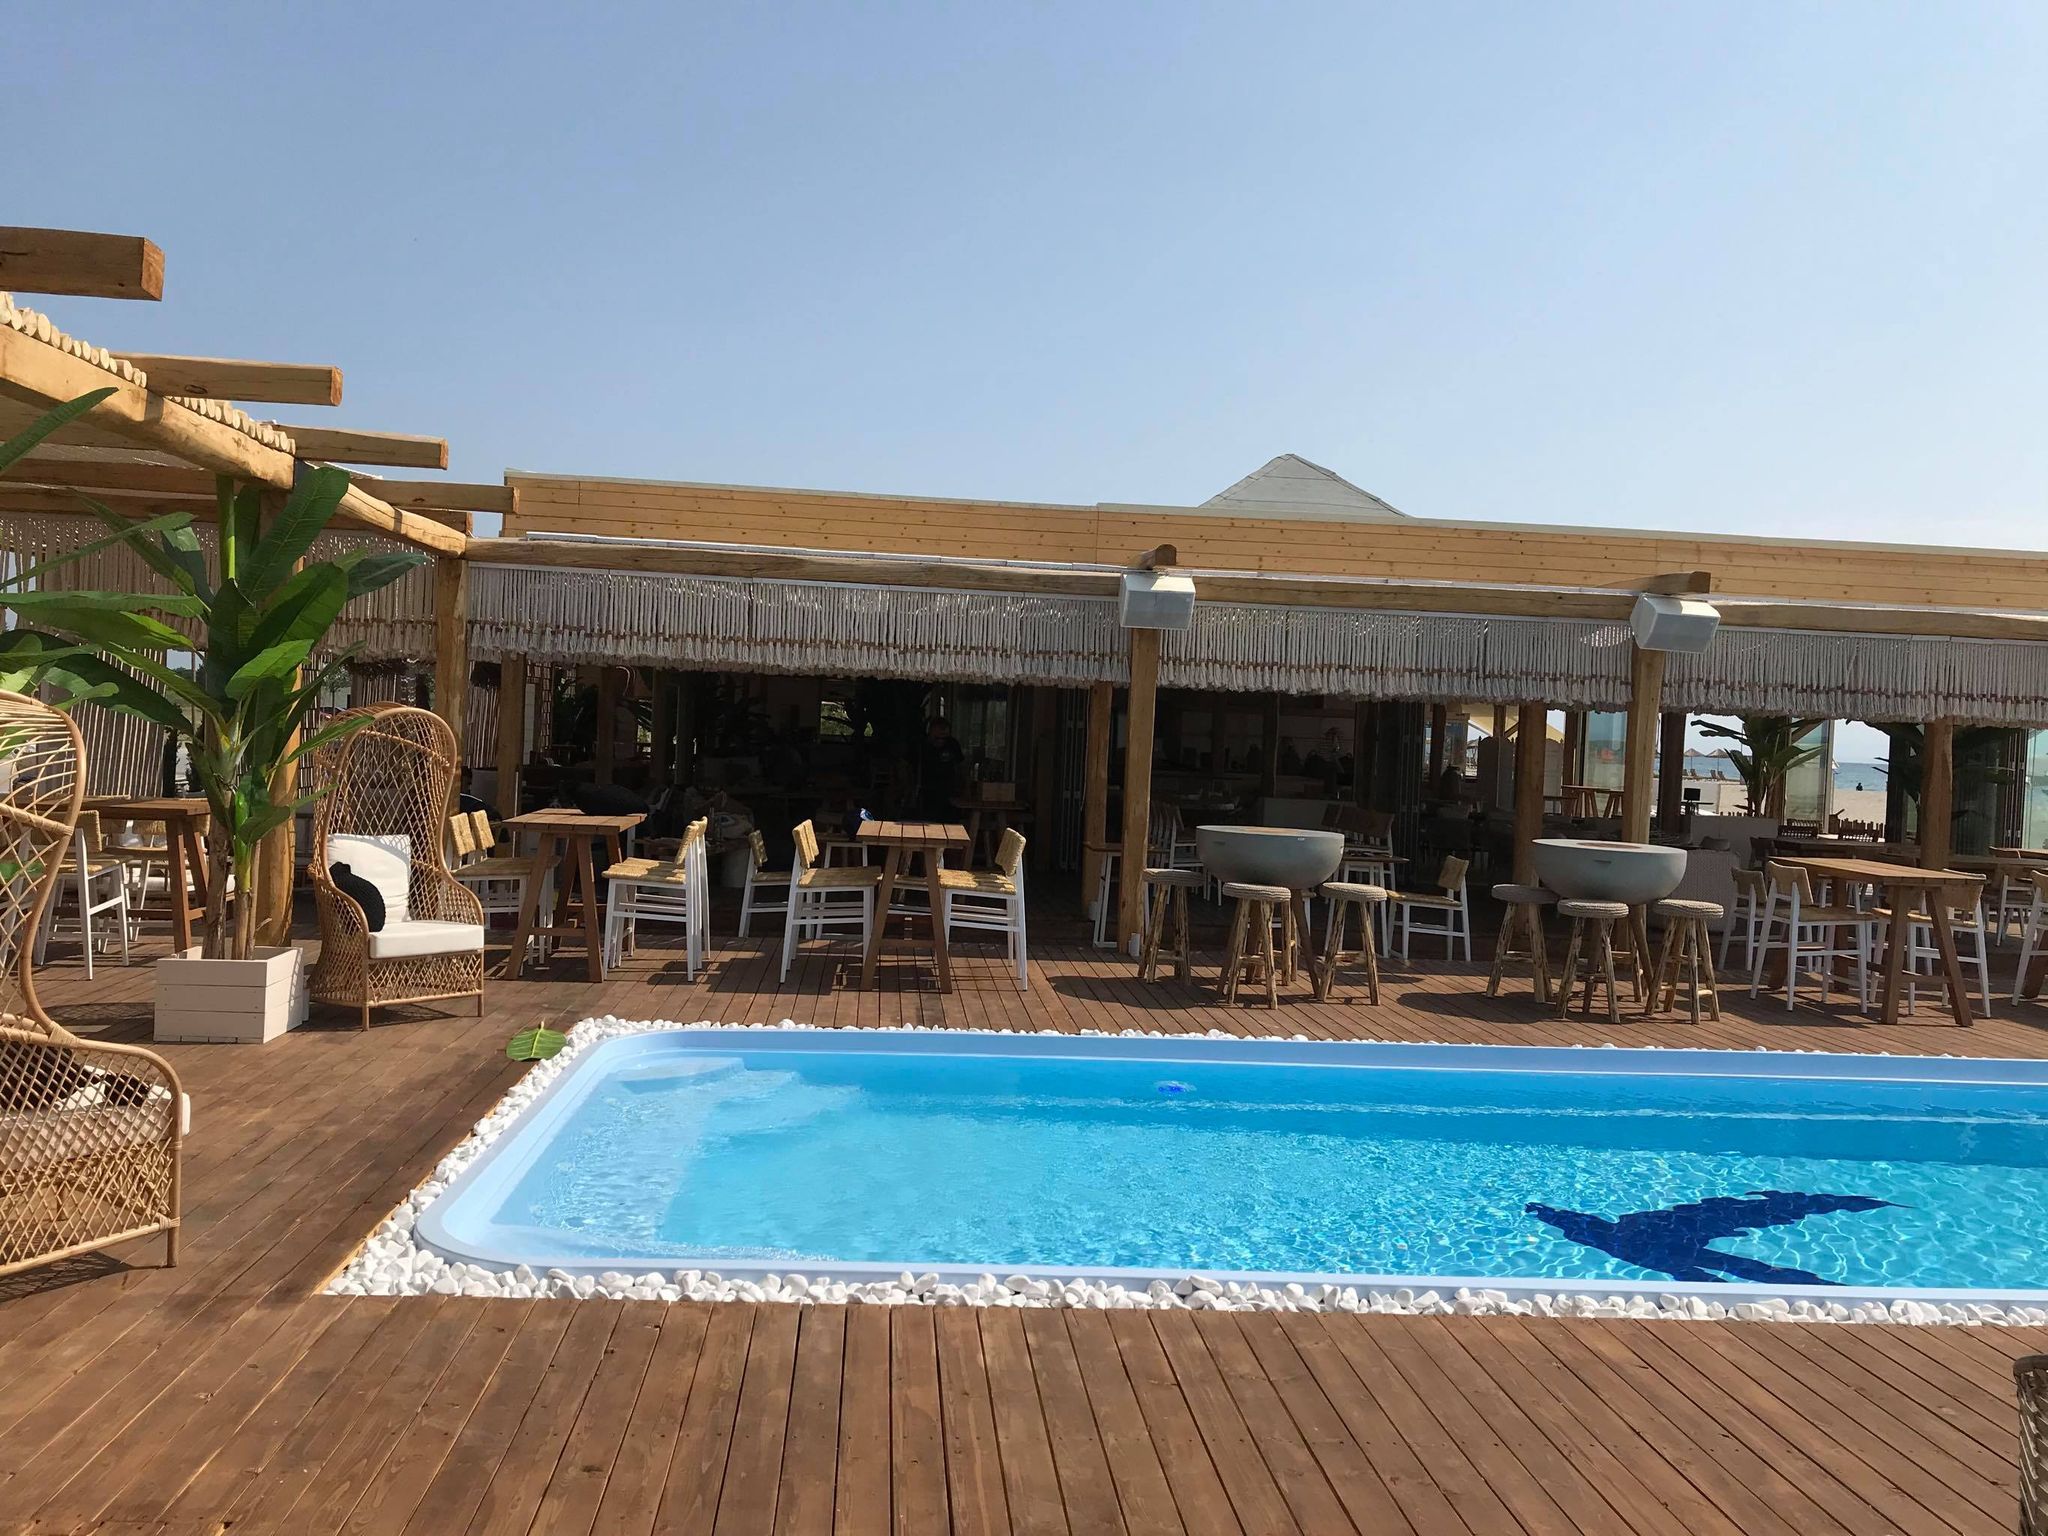 MANDALA Seaside Luxury, παραλία Κατερίνης, Pool area σκαμπό και κουρτίνες από σχοινί gtrezos